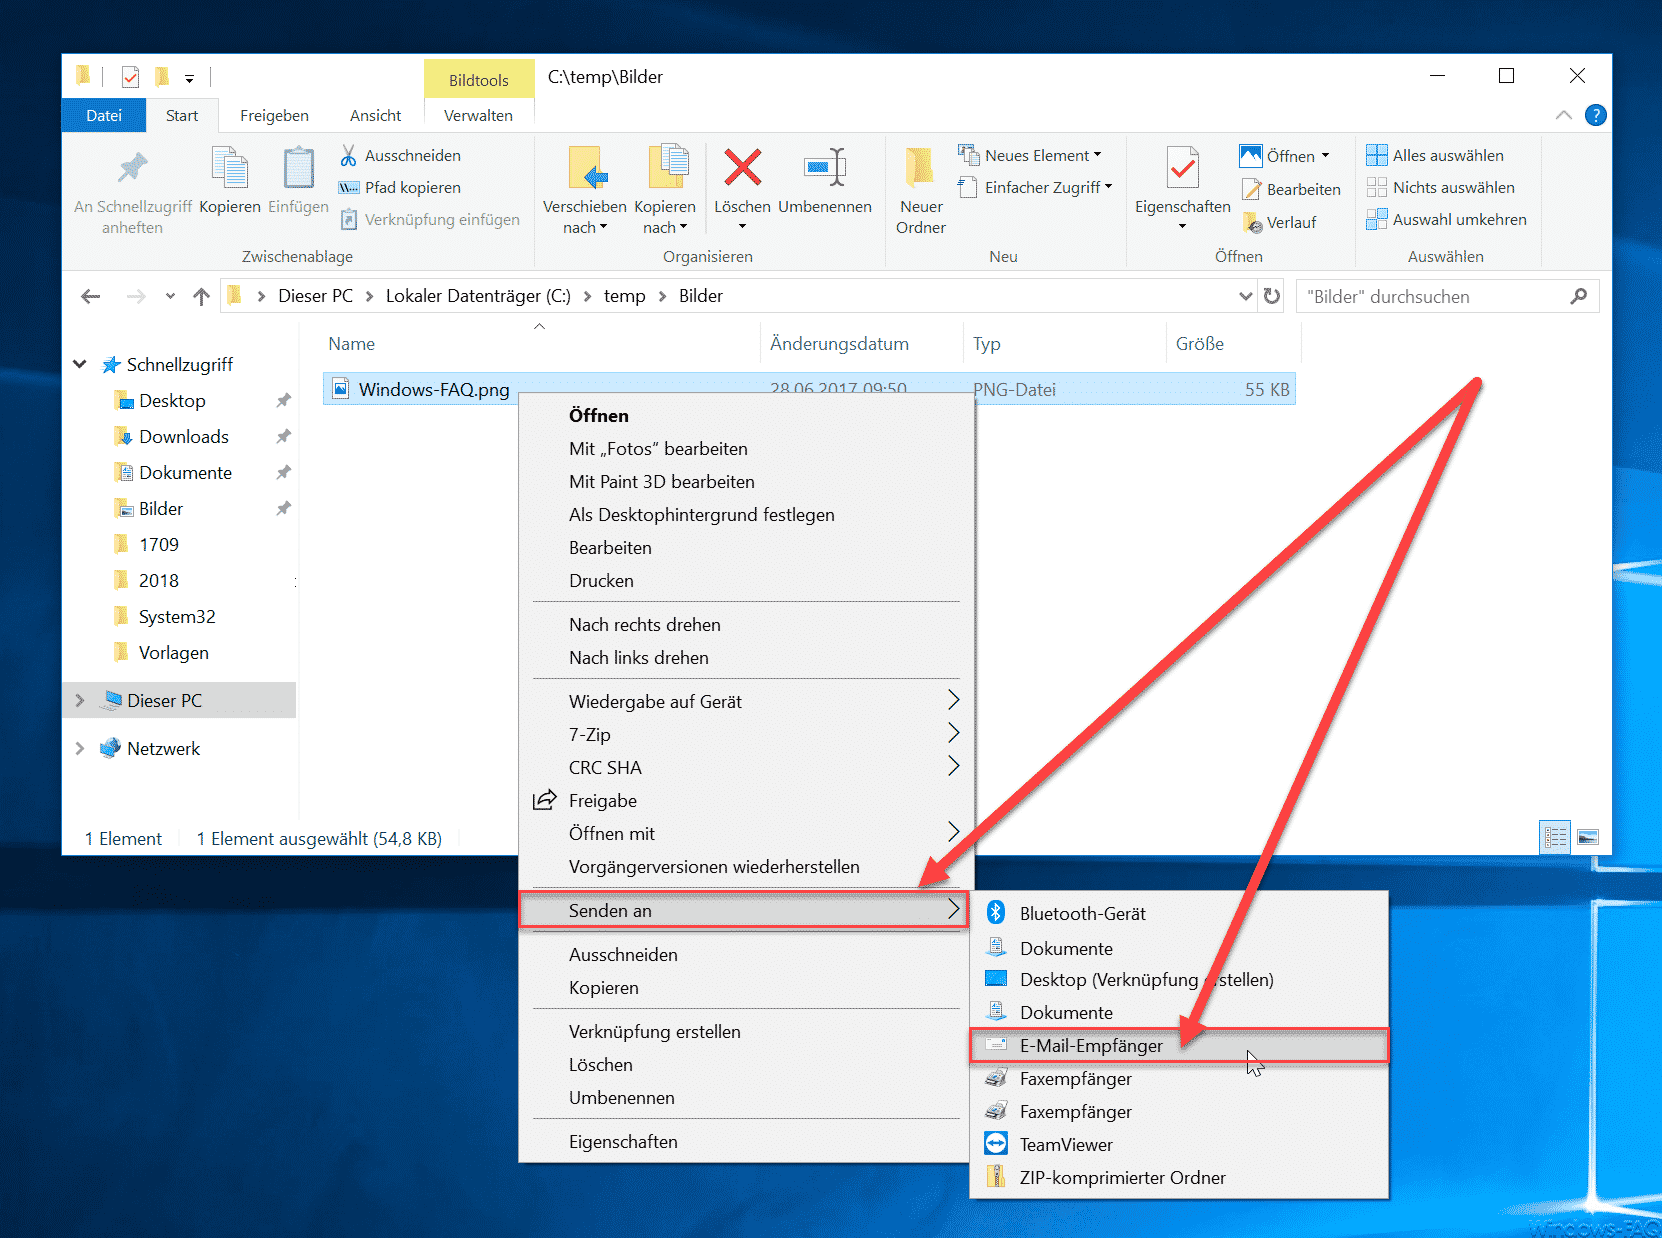 Dateien per E-Mail senden funktioniert nicht unter Windows 10 Version 1709 Fall Creators Update